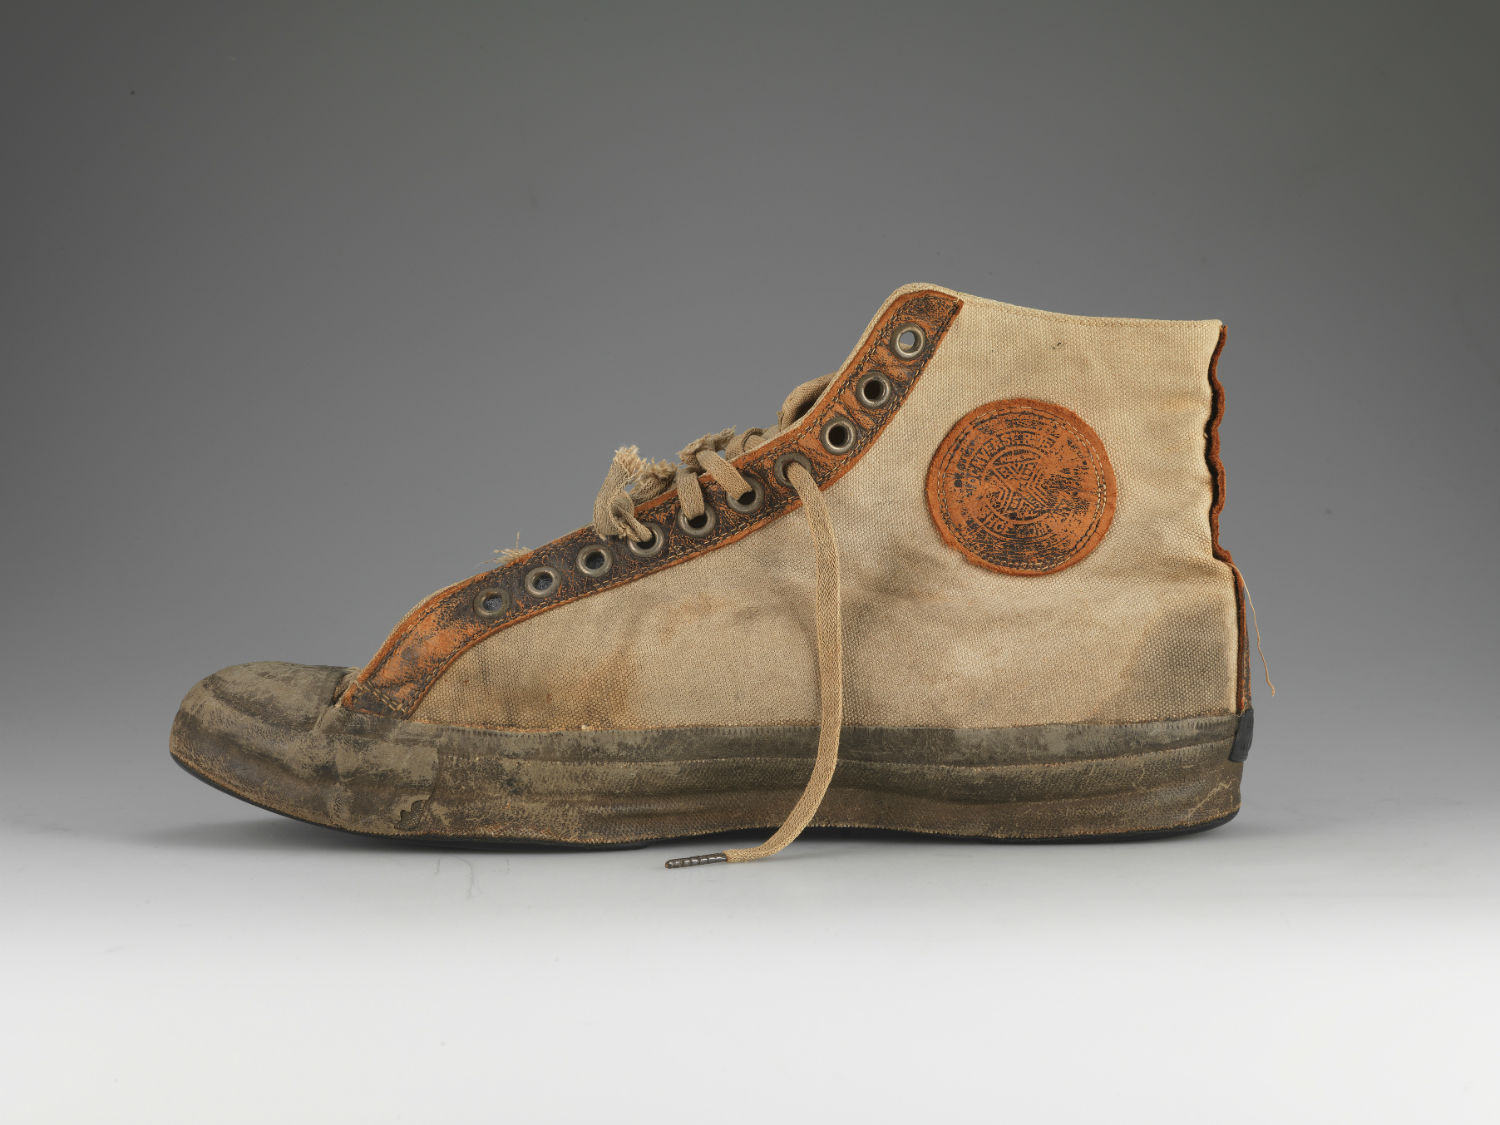 Converse Rubber Shoe Company All Star/Non Skid, 1923 Converse Archives Courtesy American Federation of Arts